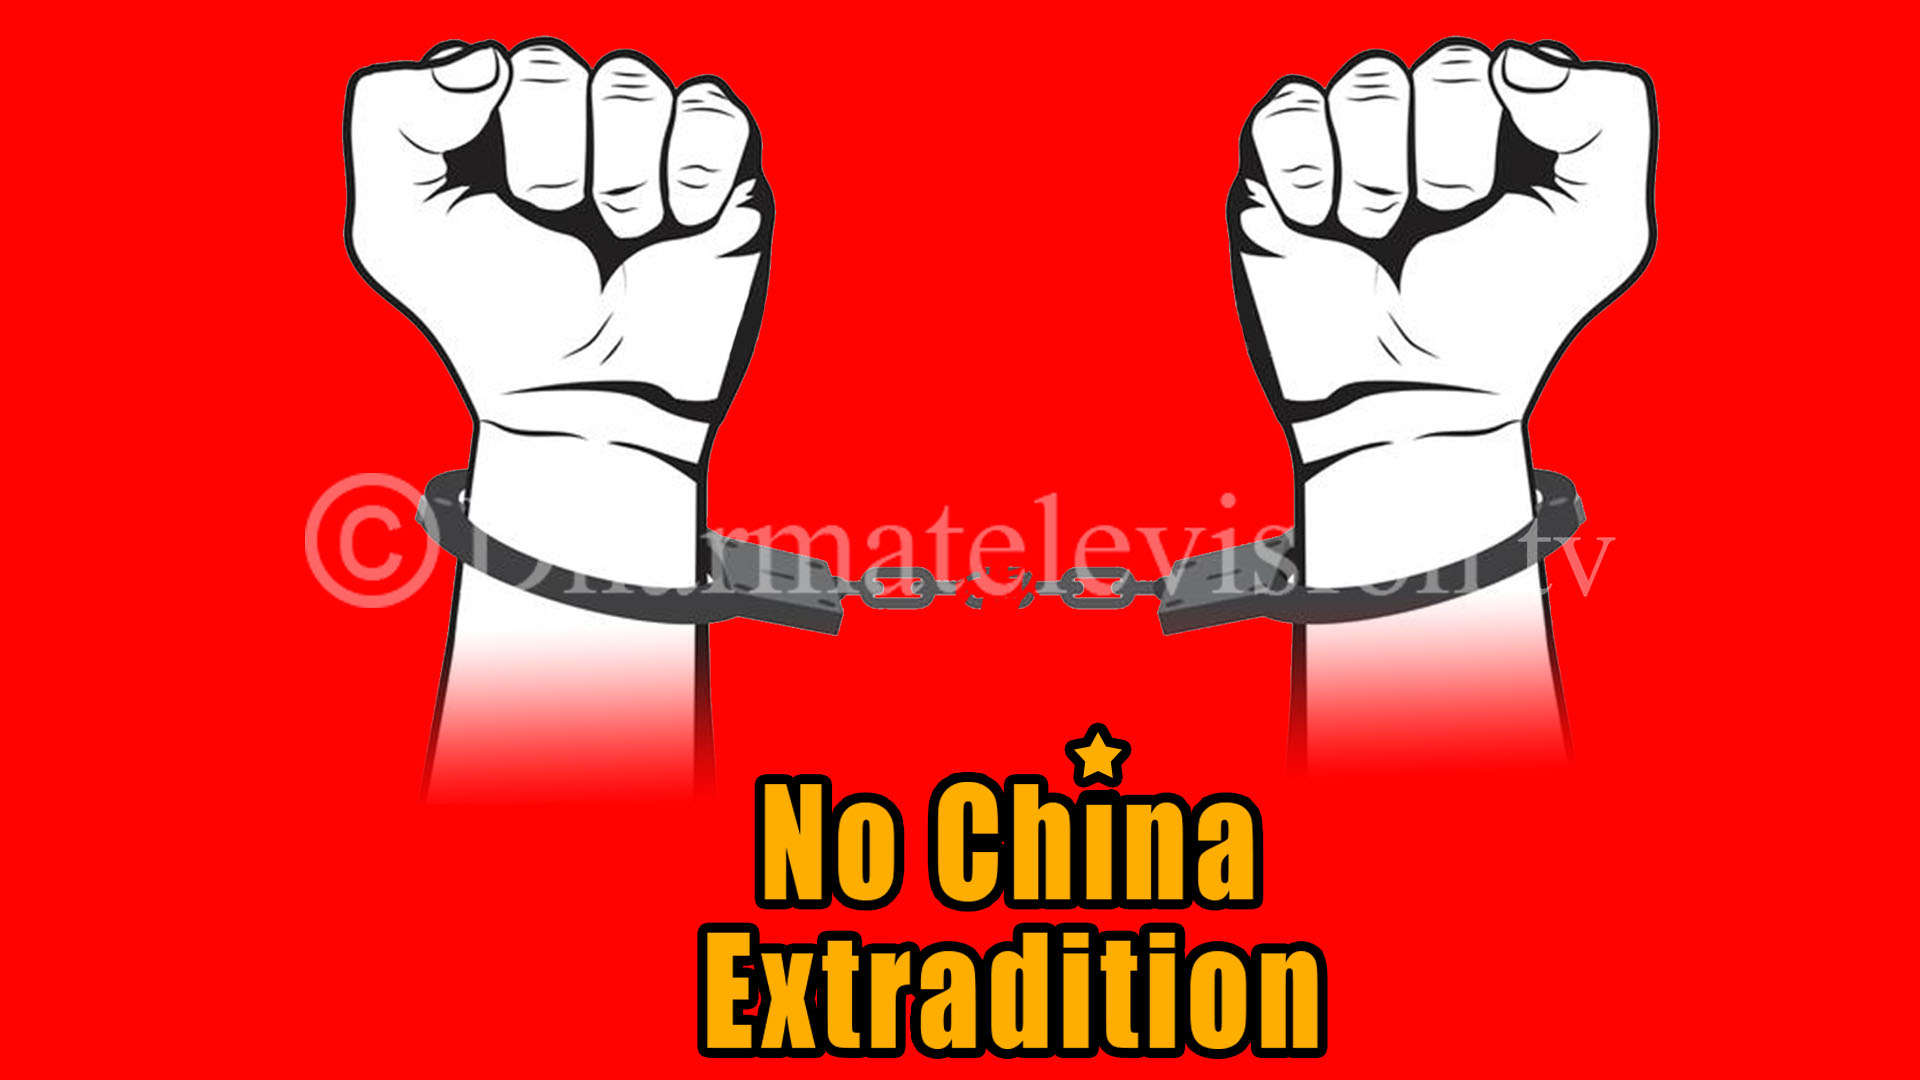 International Pressure on China regarding Hong Kong Law